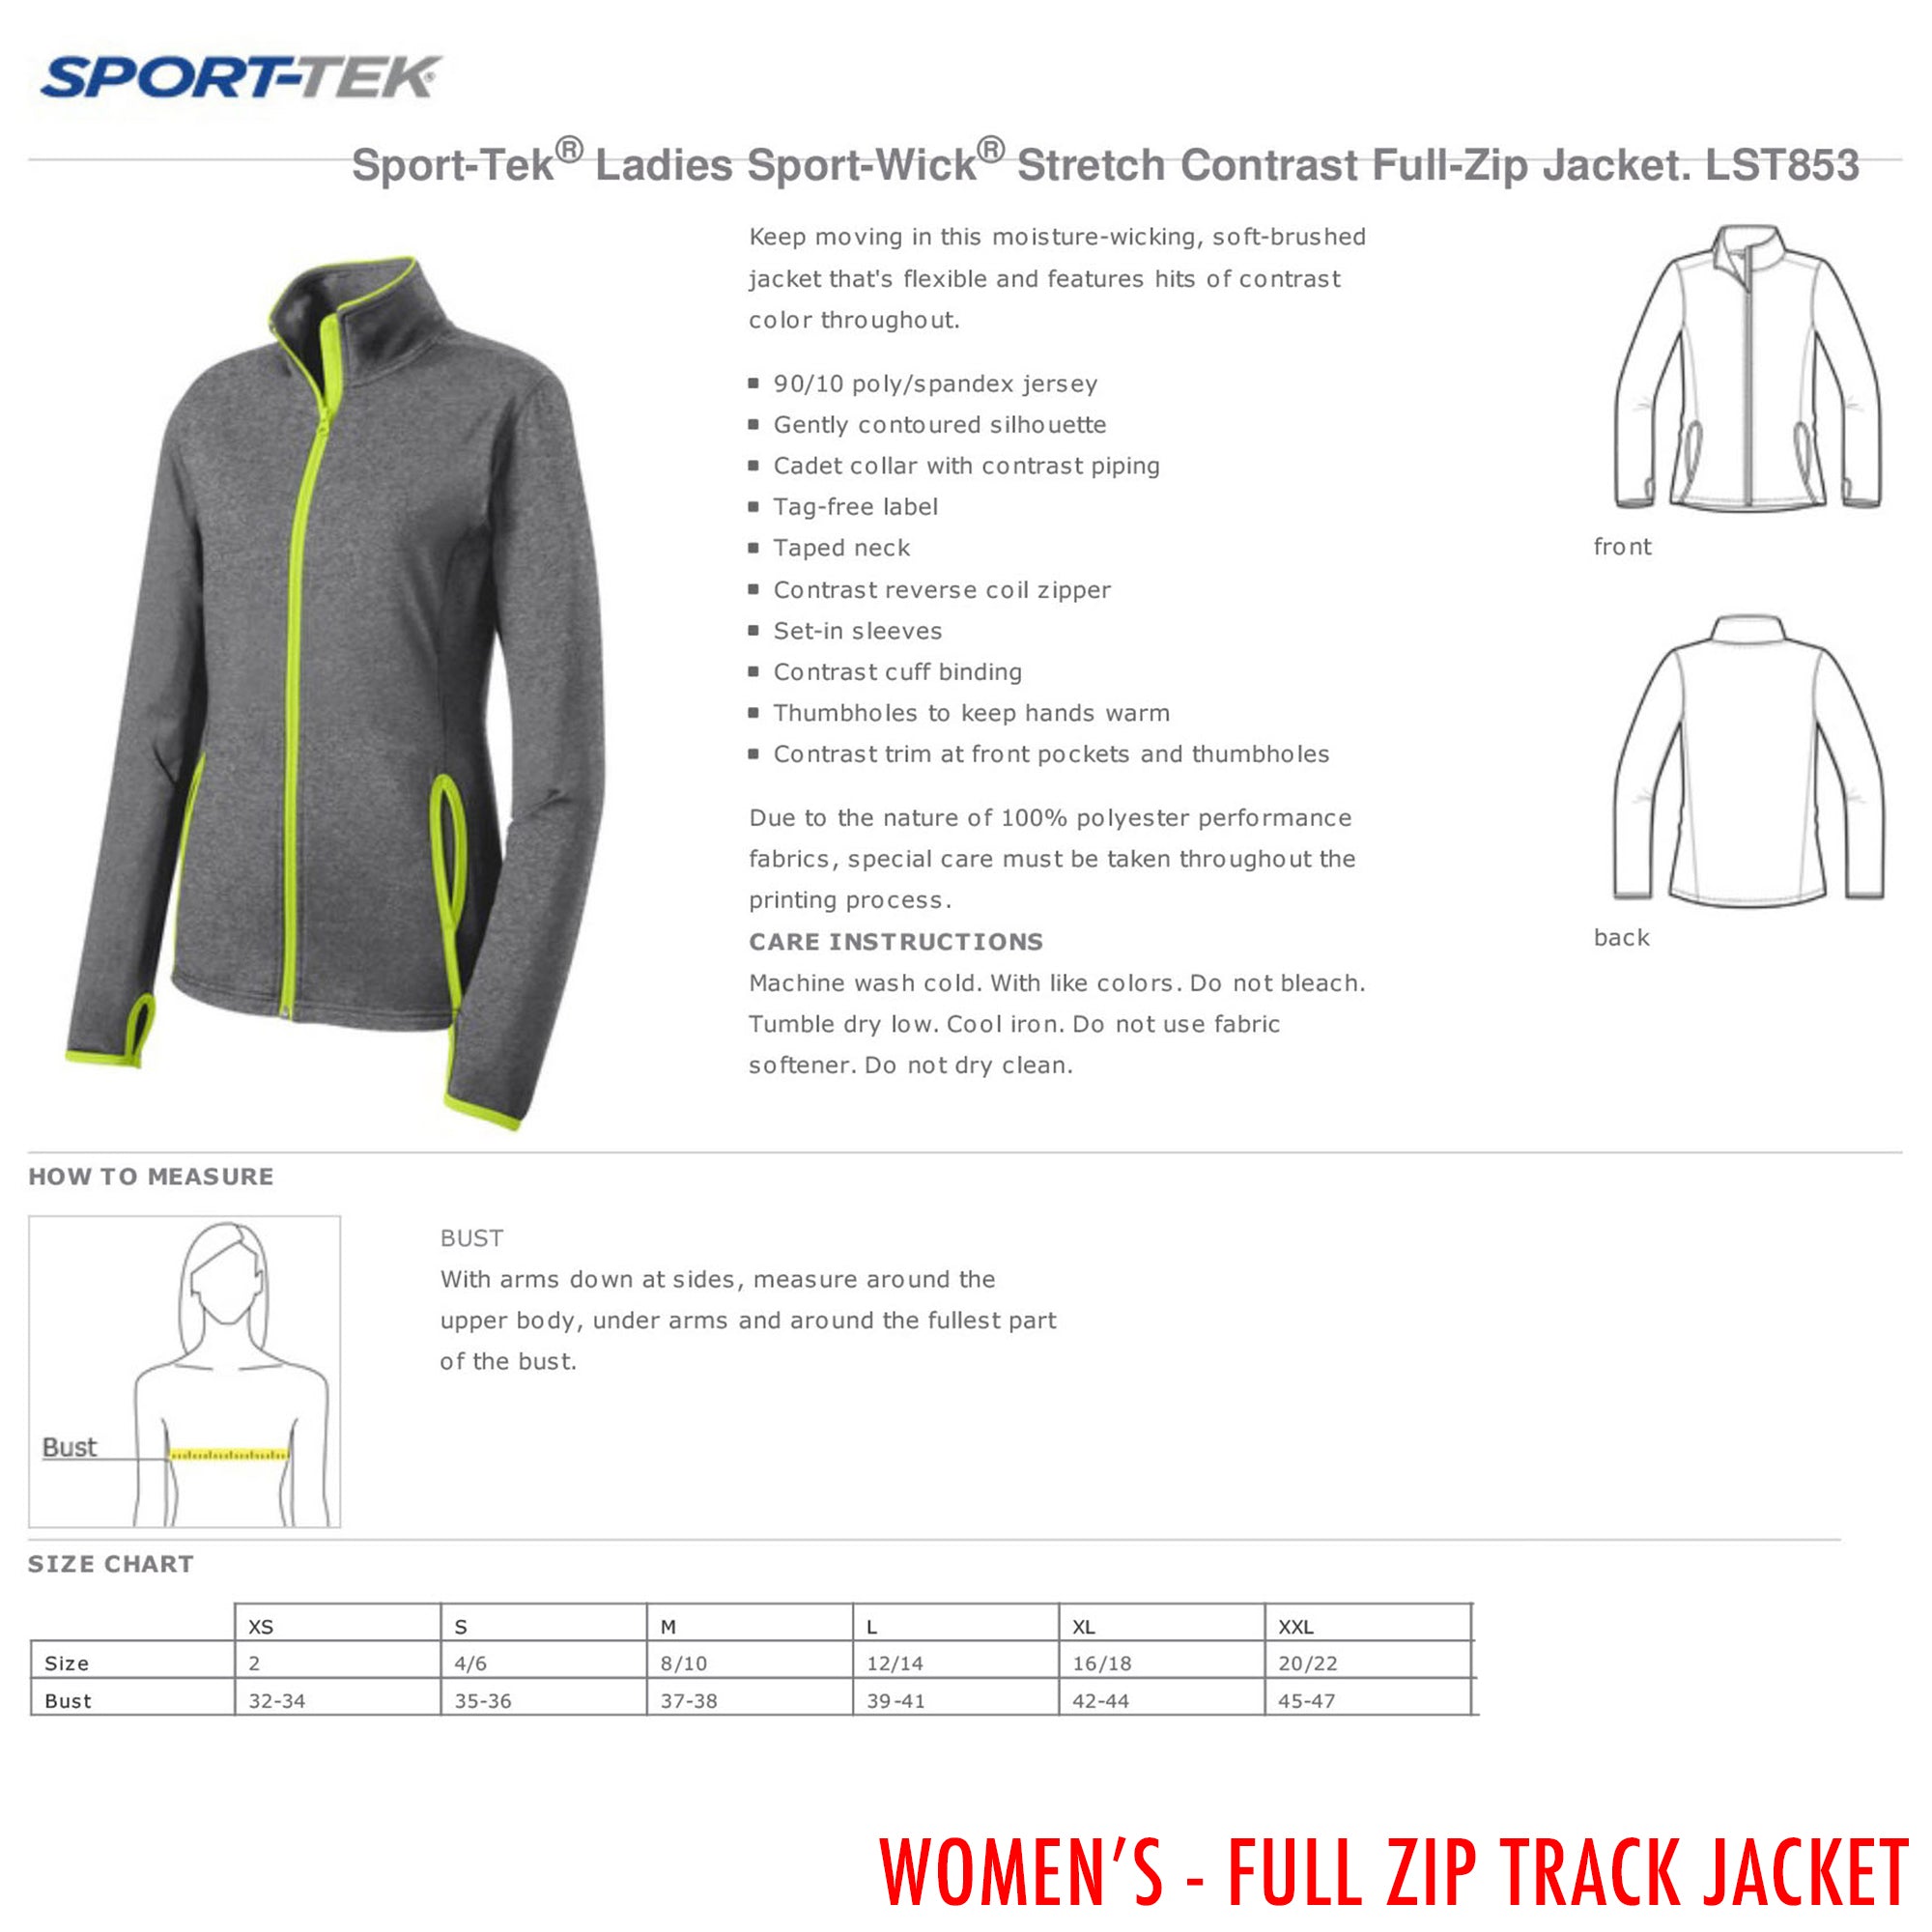 Piped Sleeve Sporty Zip-Up Jacket - Women - Ready-to-Wear